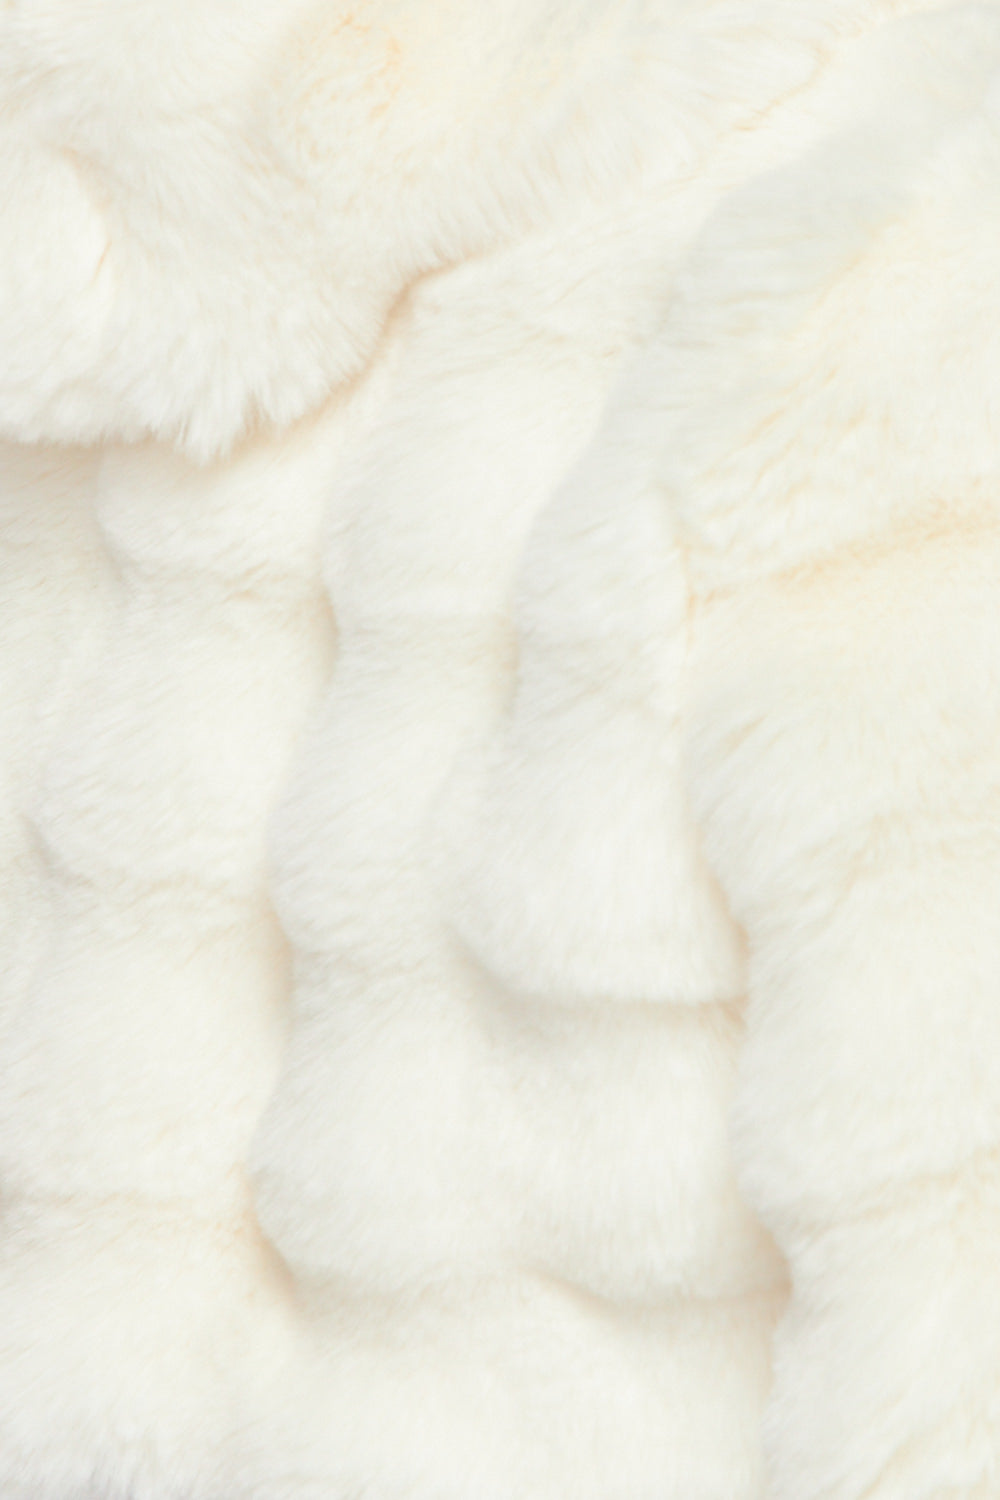 Aria Soft Plush Faux Fur Hooded Crop Jacket